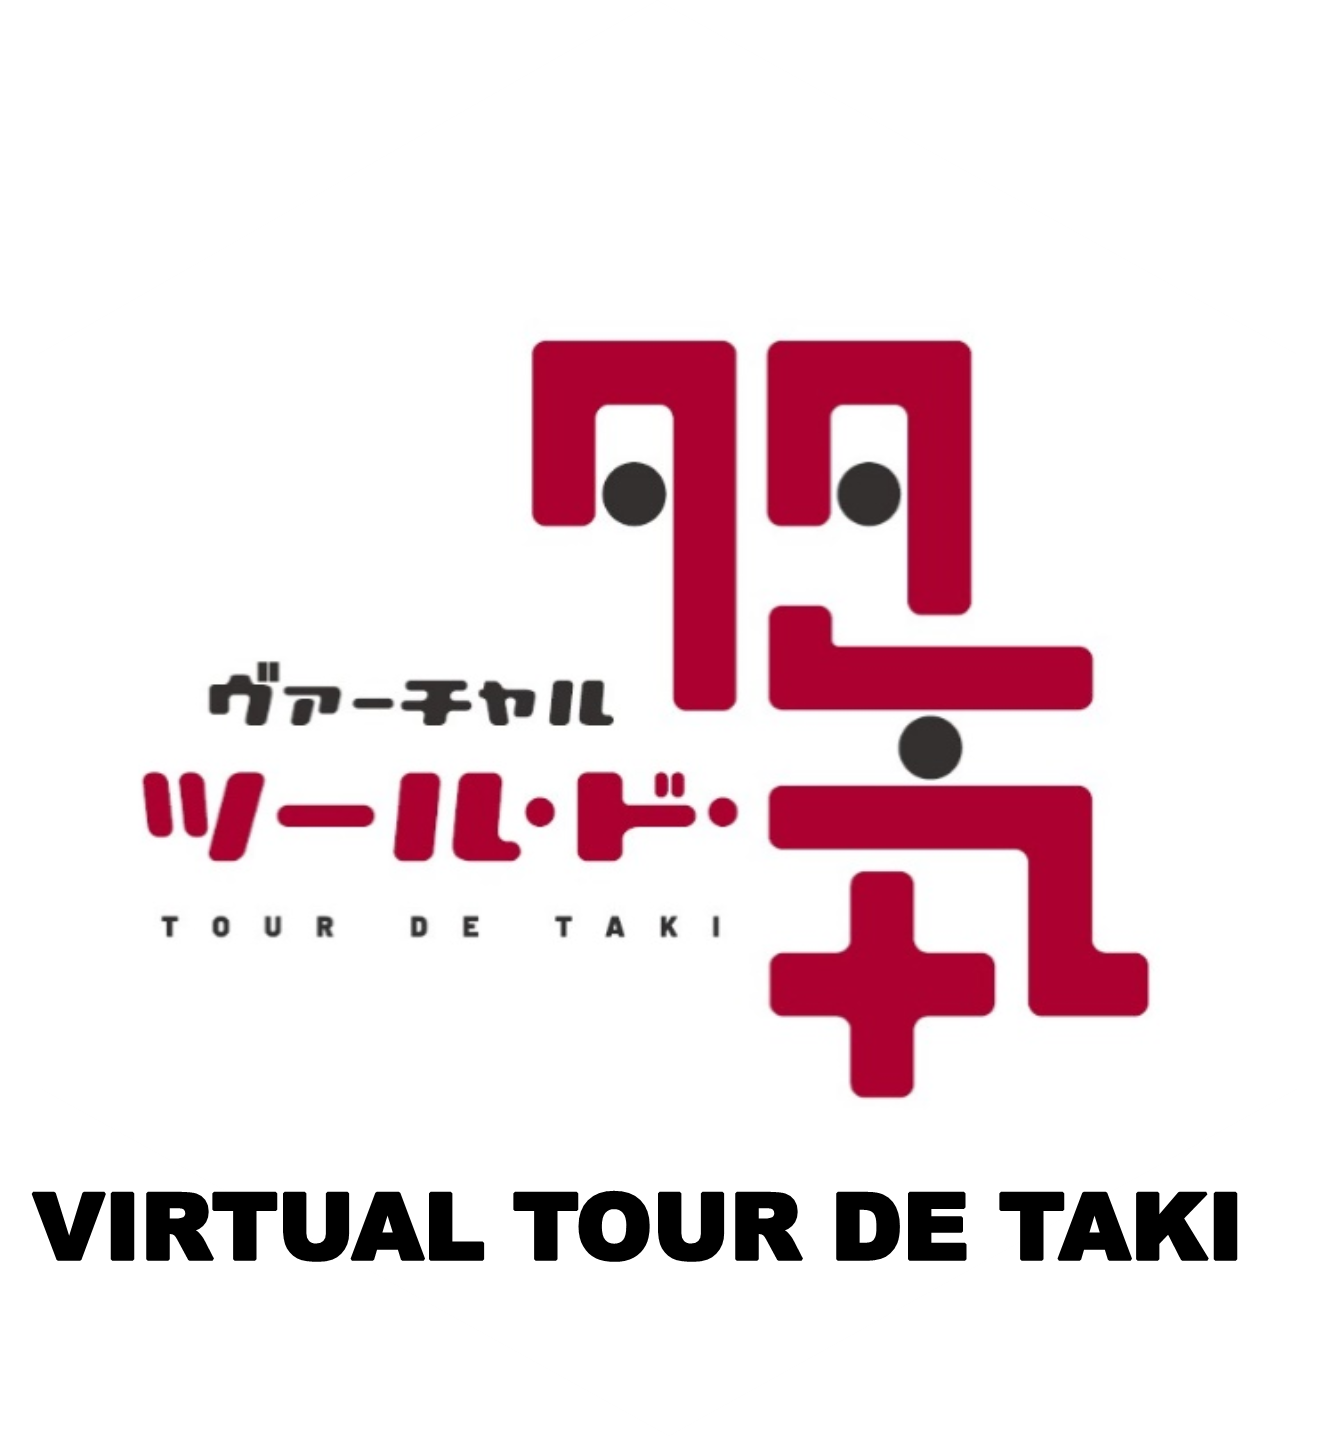 Virtual Tour de Taki Challenge